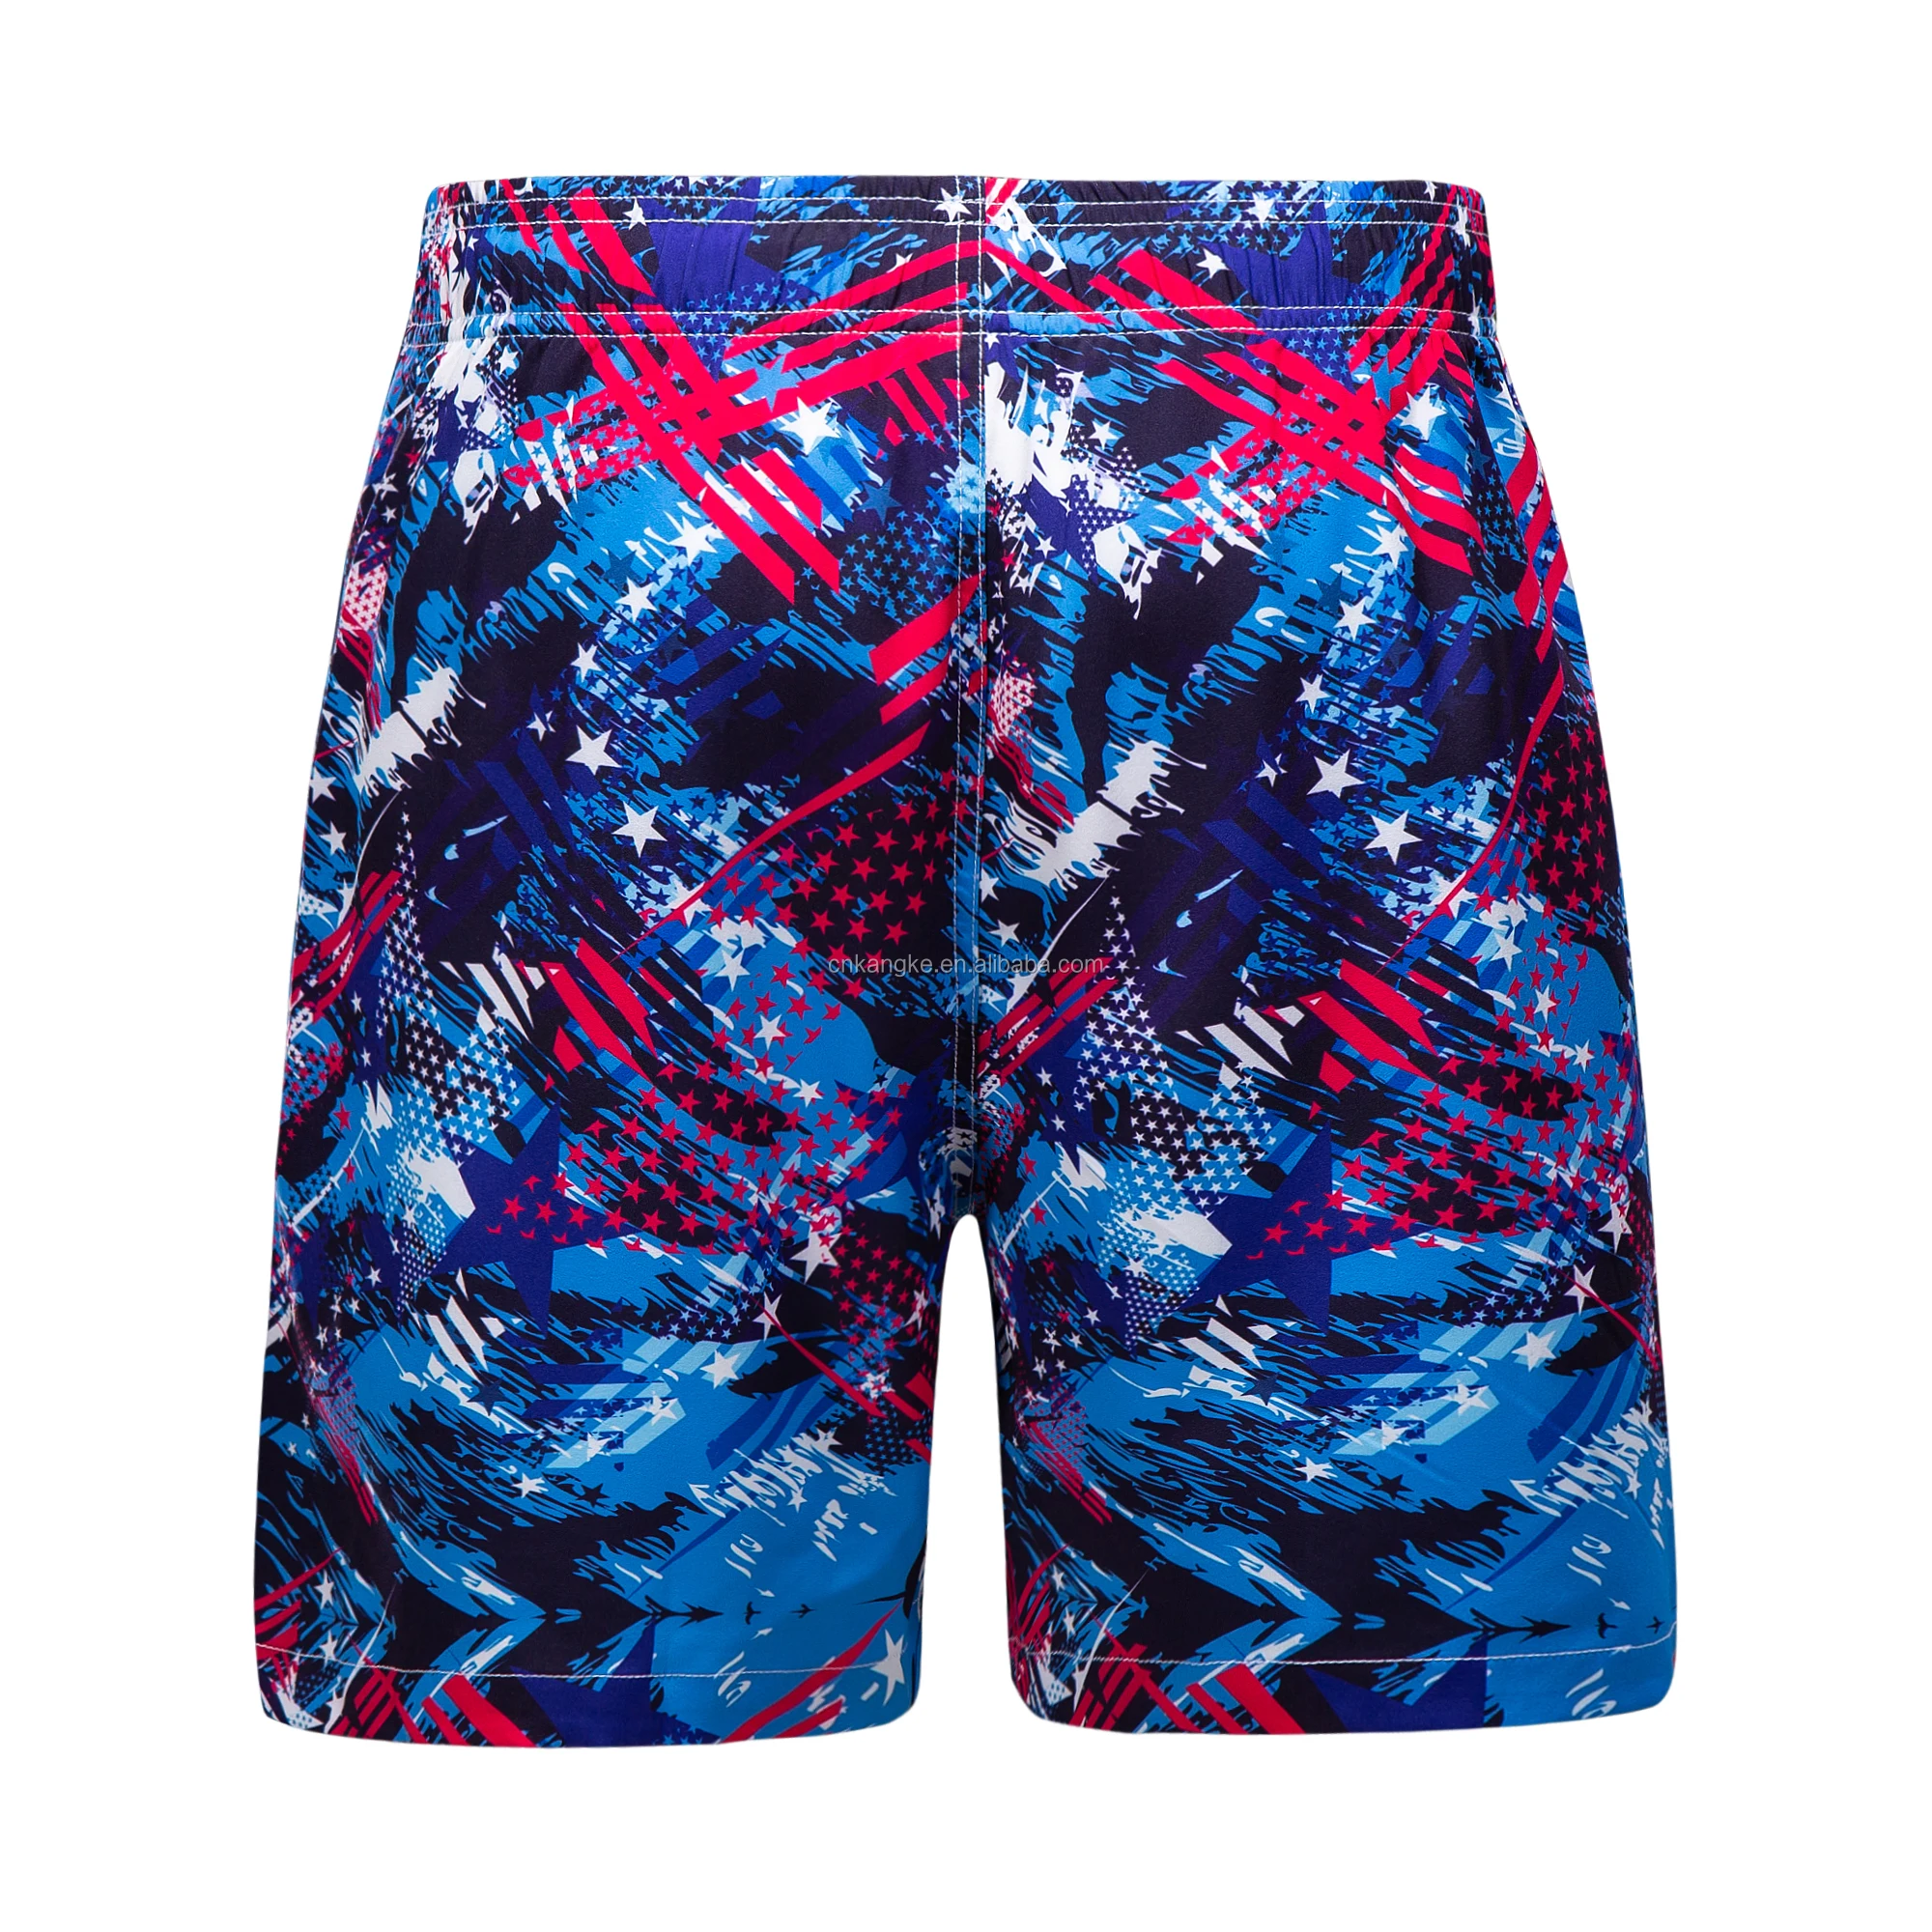 KGKE Men/'s Swim Trunks Big Size Quick Dry Fashion Print Swim Trunks and Beach Shorts Surf Shorts